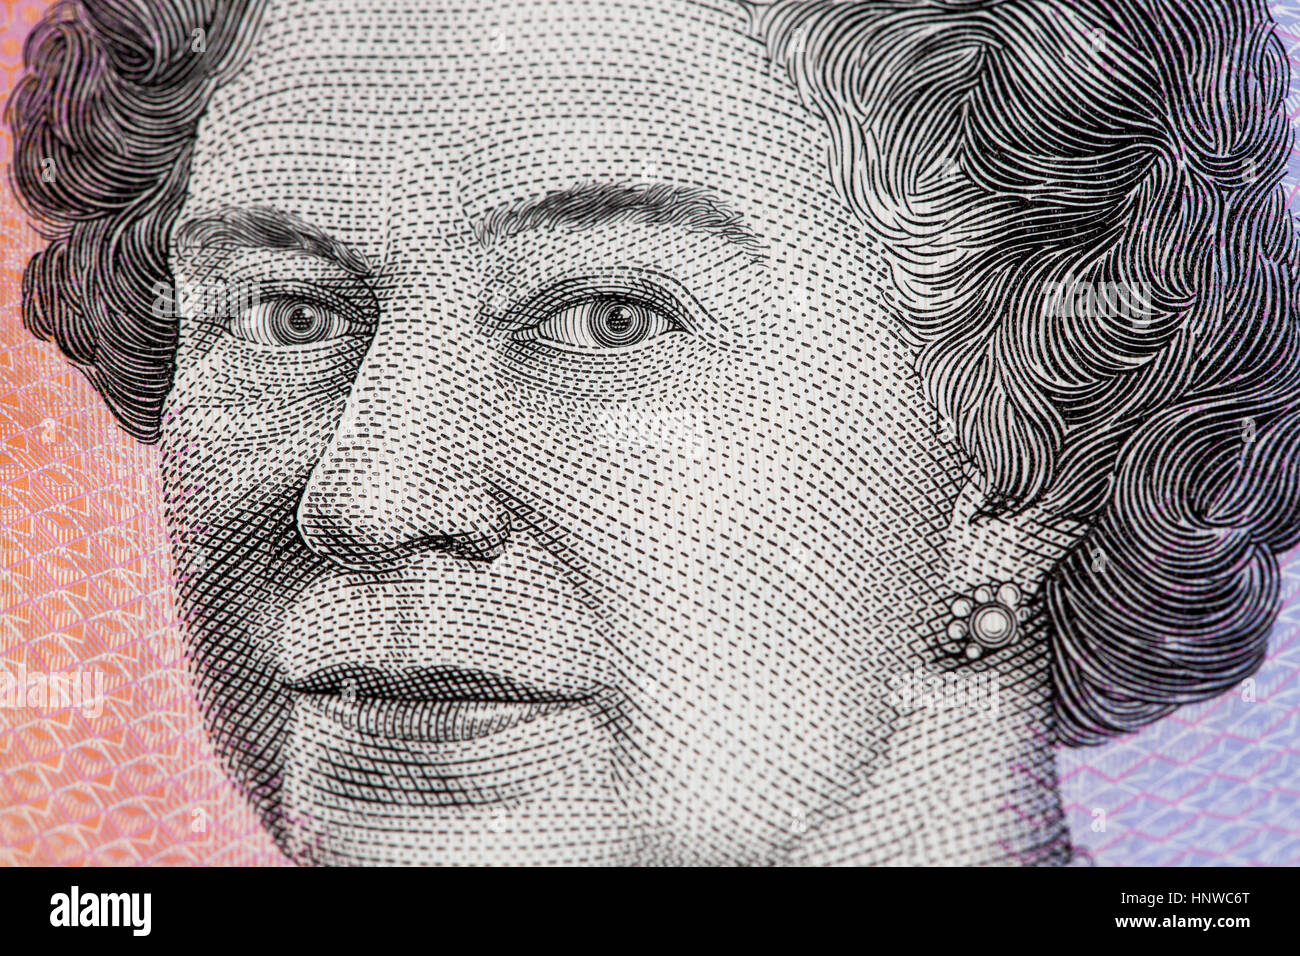 Portrait of Queen Elizabeth II - Australian 5 dollar bill closeup Stock Photo